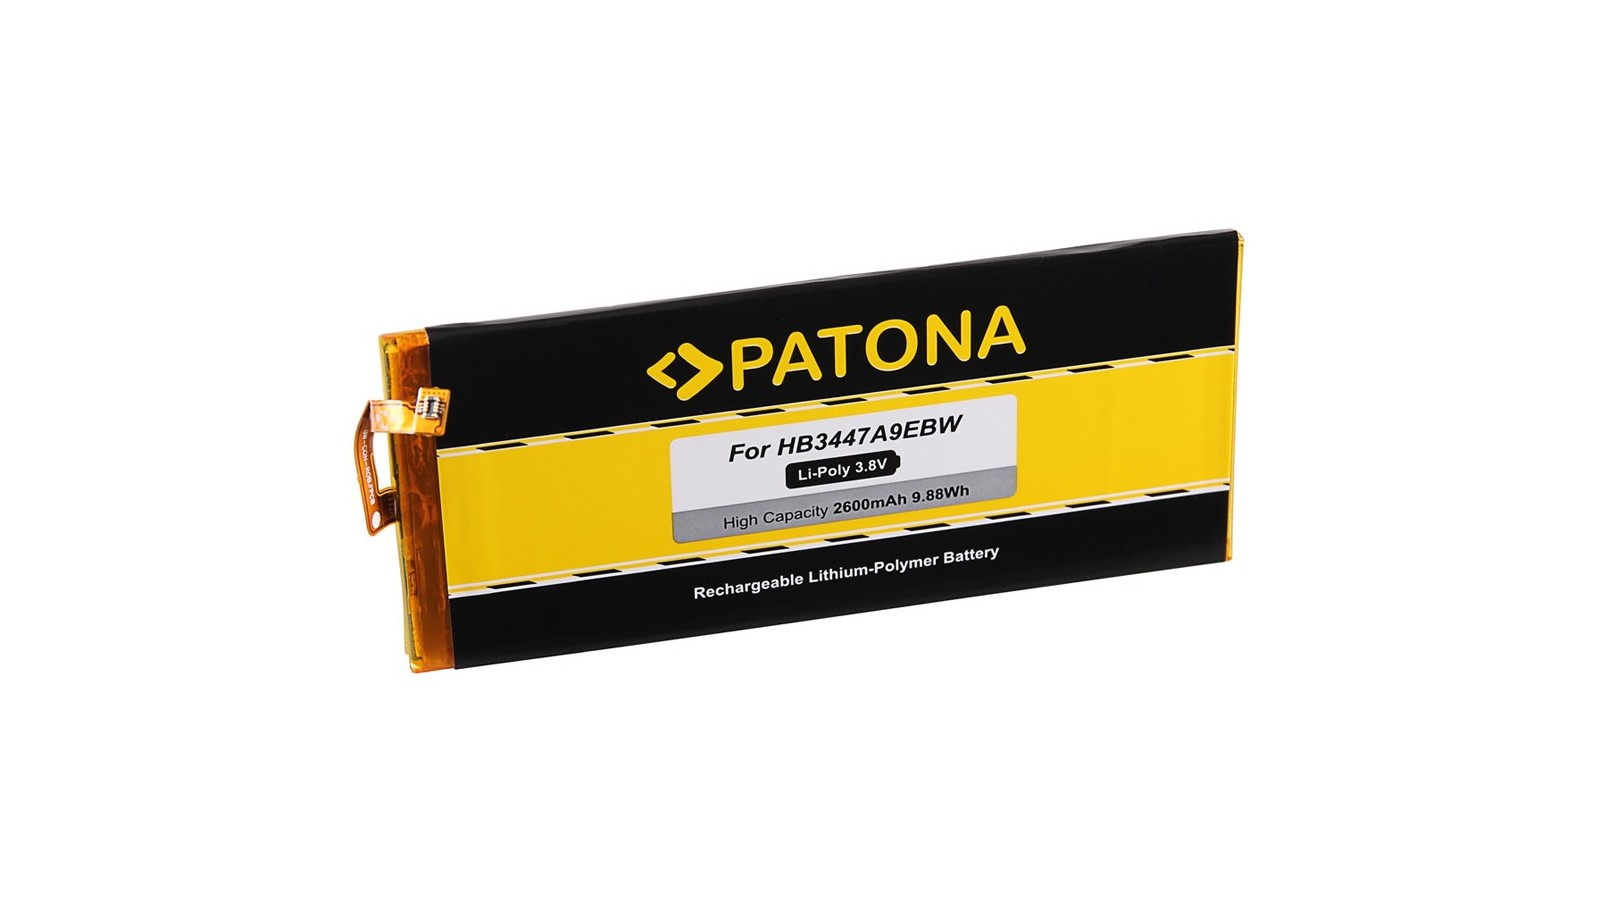 Batteria per Huawei P8, GRA-L09, GRA-UL00, GRA-UL10 Dual Sim, HB3447A9EBW